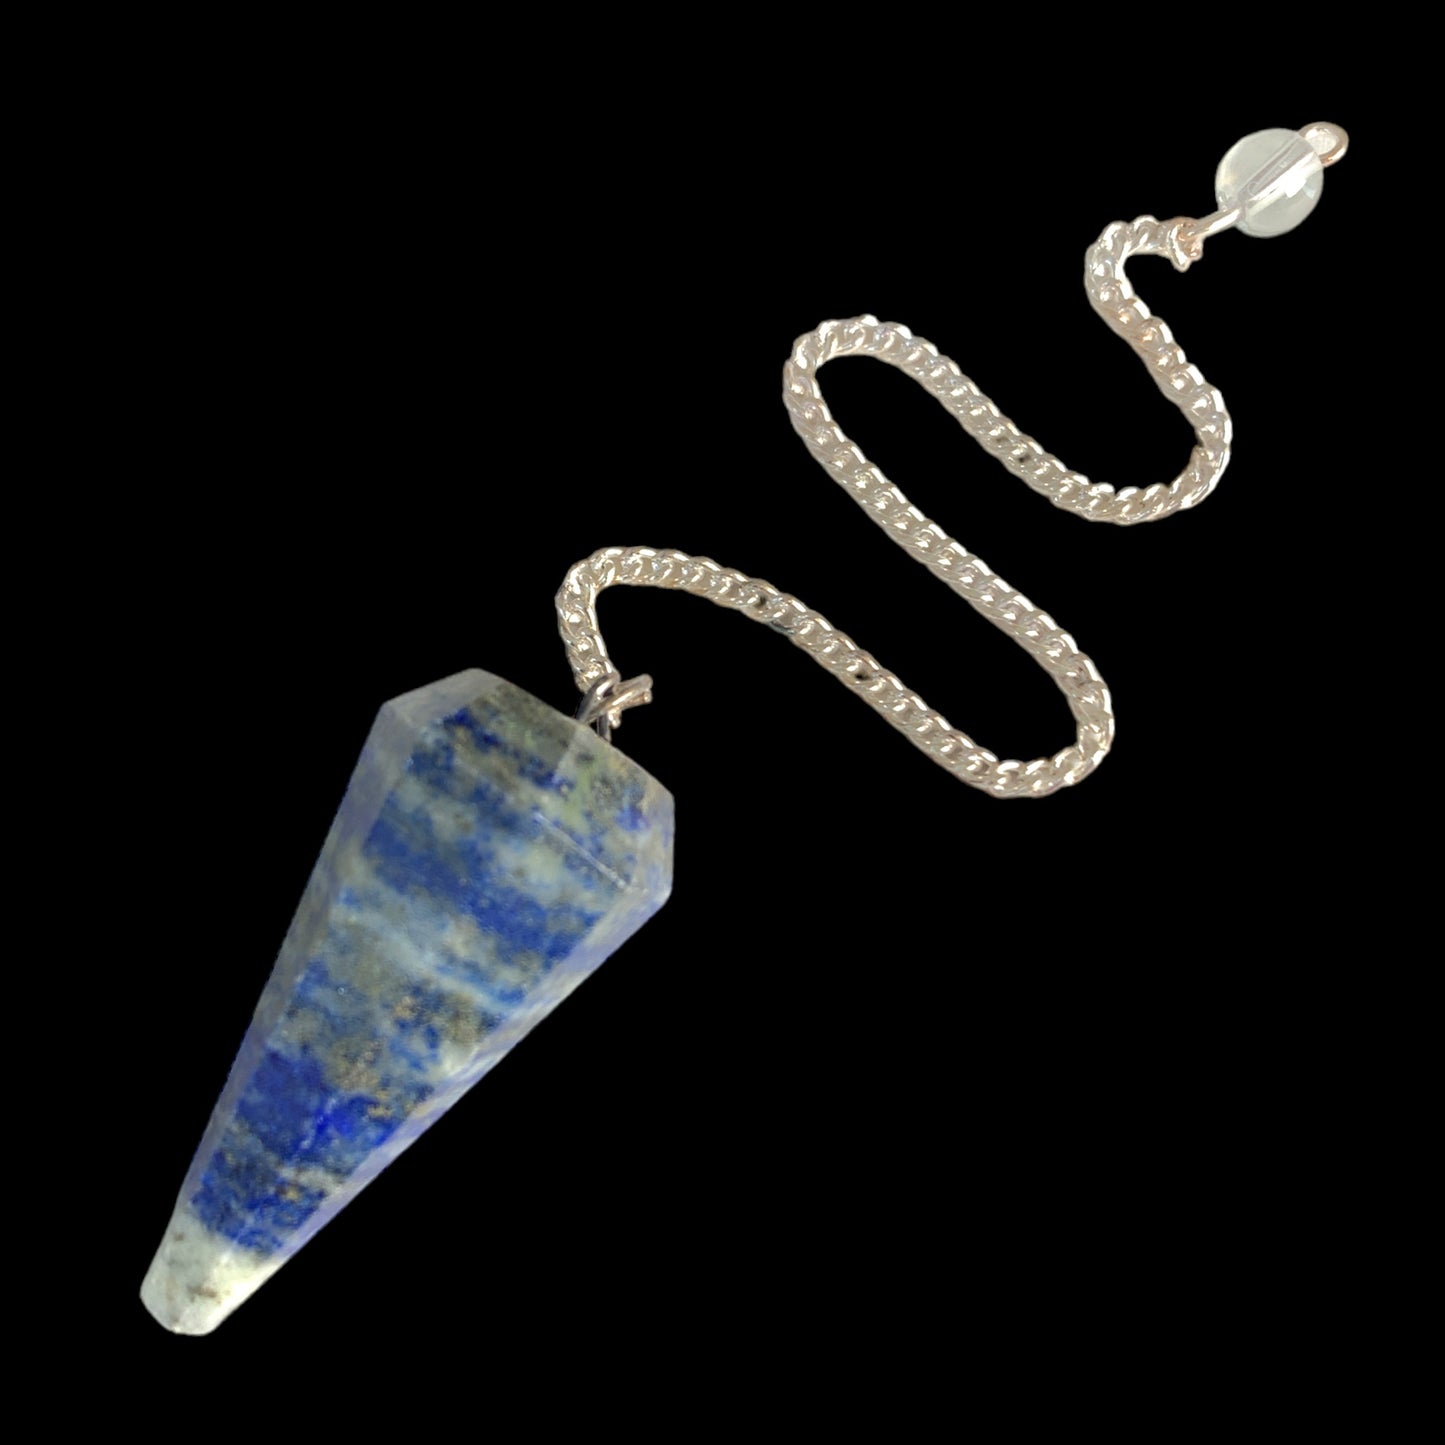 Lapis Lazuli Pendulum w Chain - 35-45mm - 8 Facets - 20g - NEW422